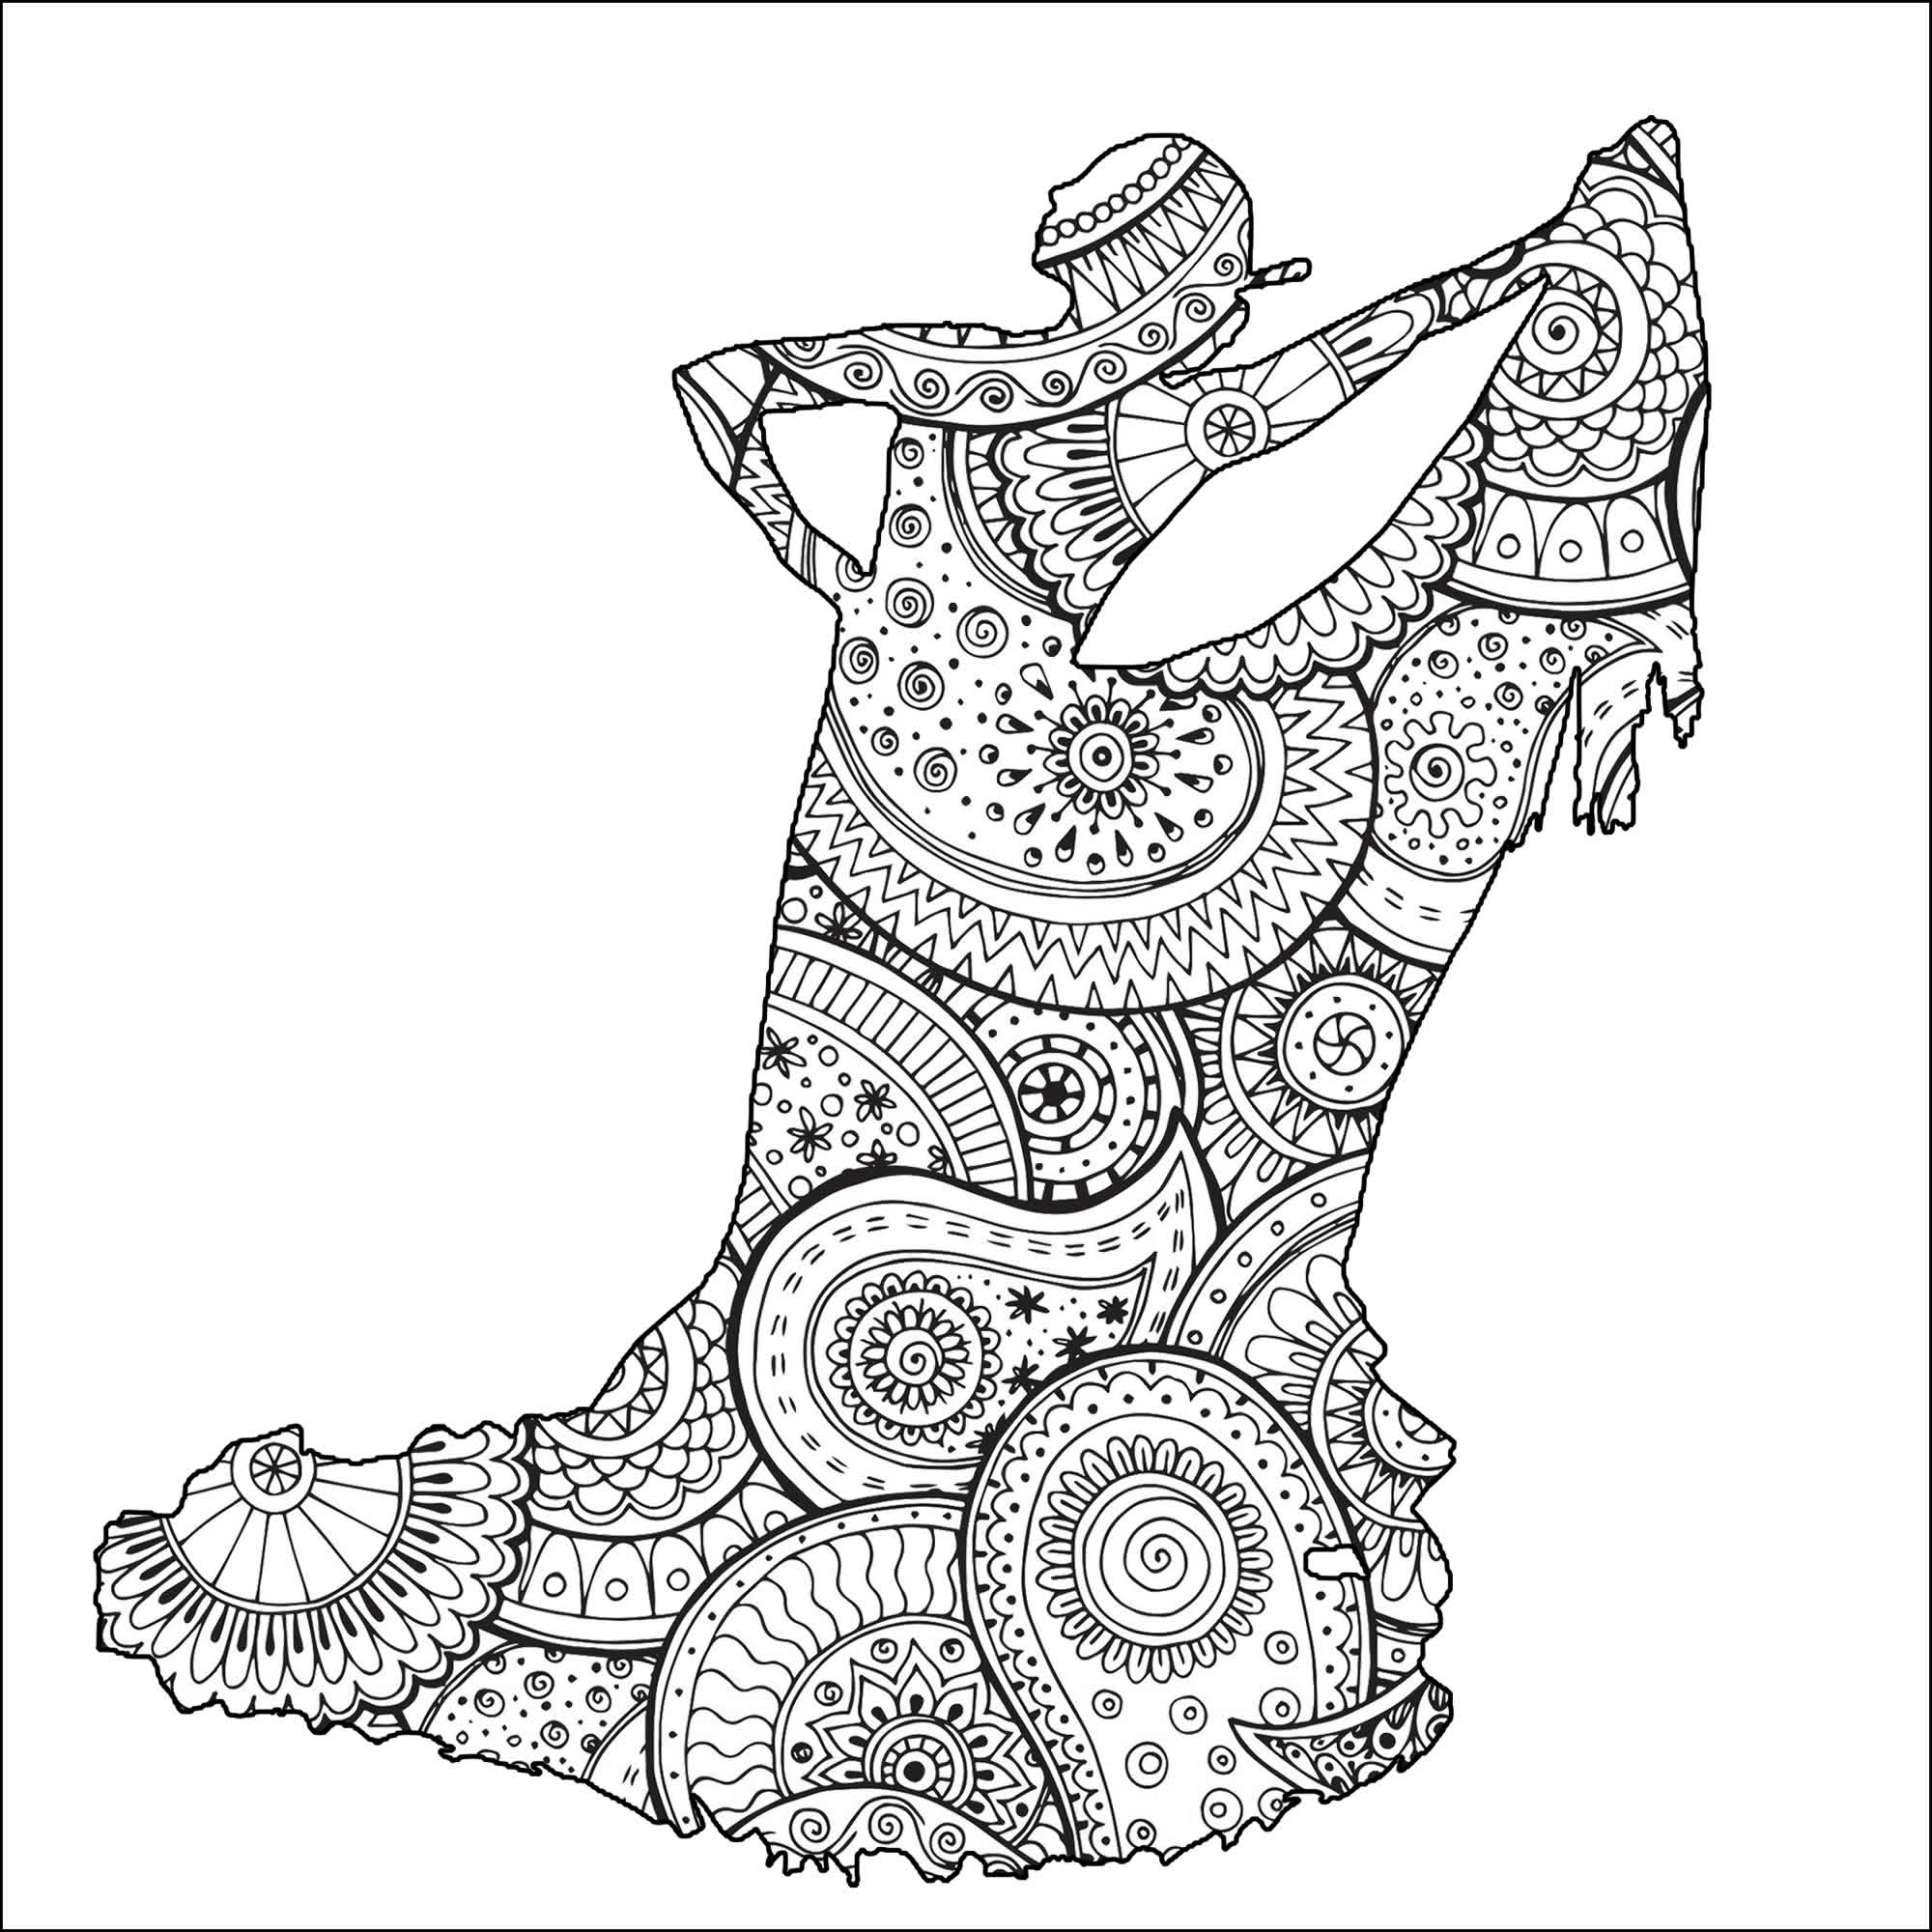 Bonita figura femenina de bailaora de flamenco con motivos de Zentangle y paisley